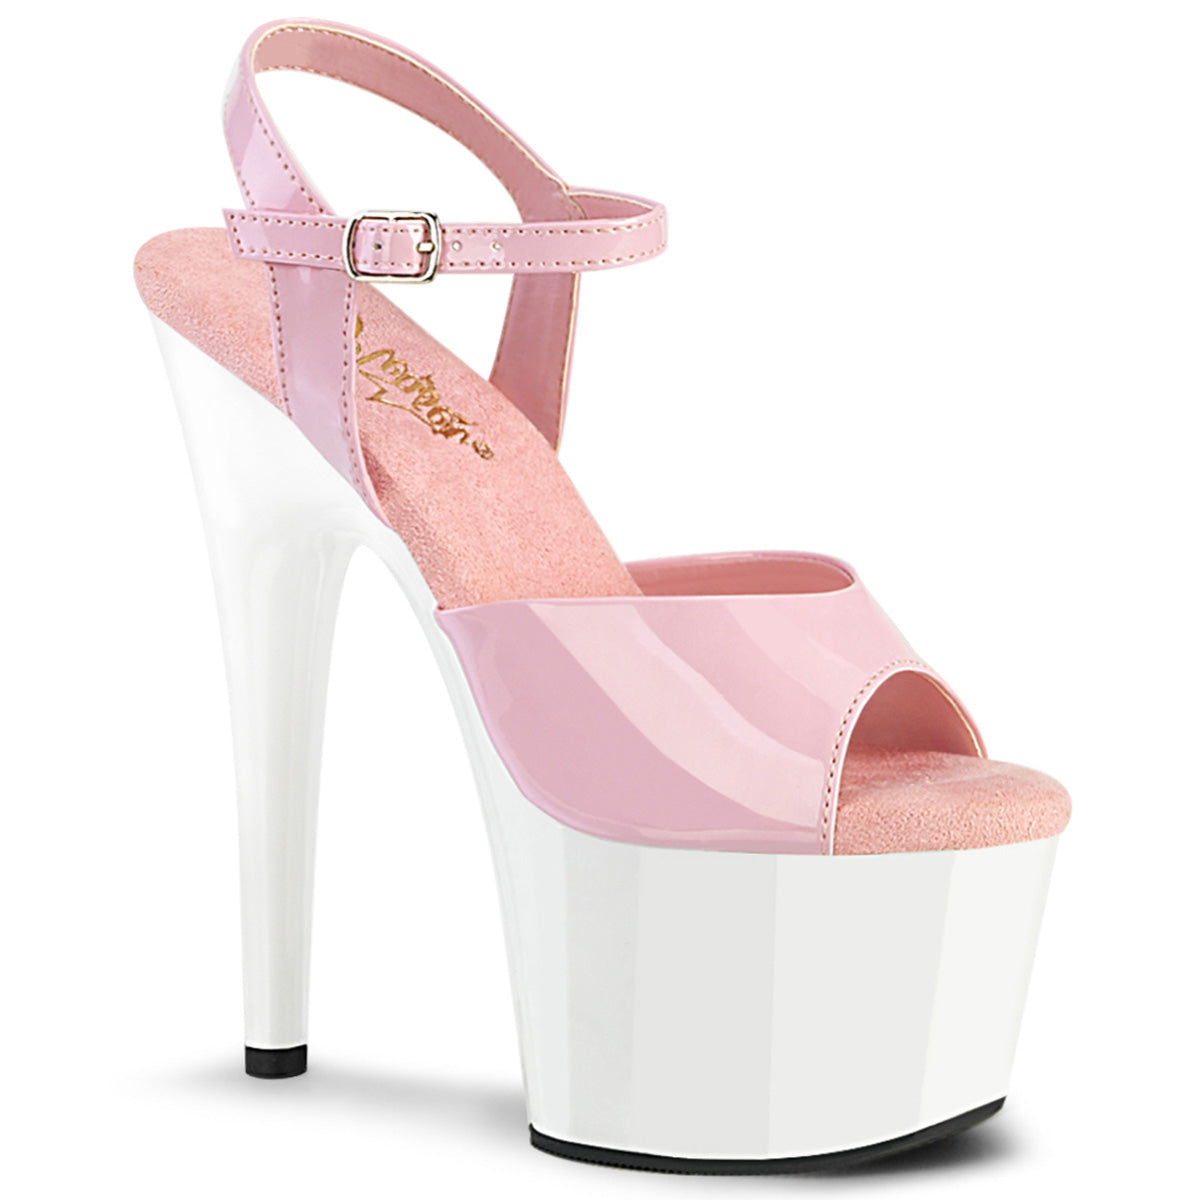 Pleaser ADORE-709 Baby Pink Pat 7 Inch (178mm) Heel, 2 3/4 Inch (70mm) Platform Ankle Strap Sandal